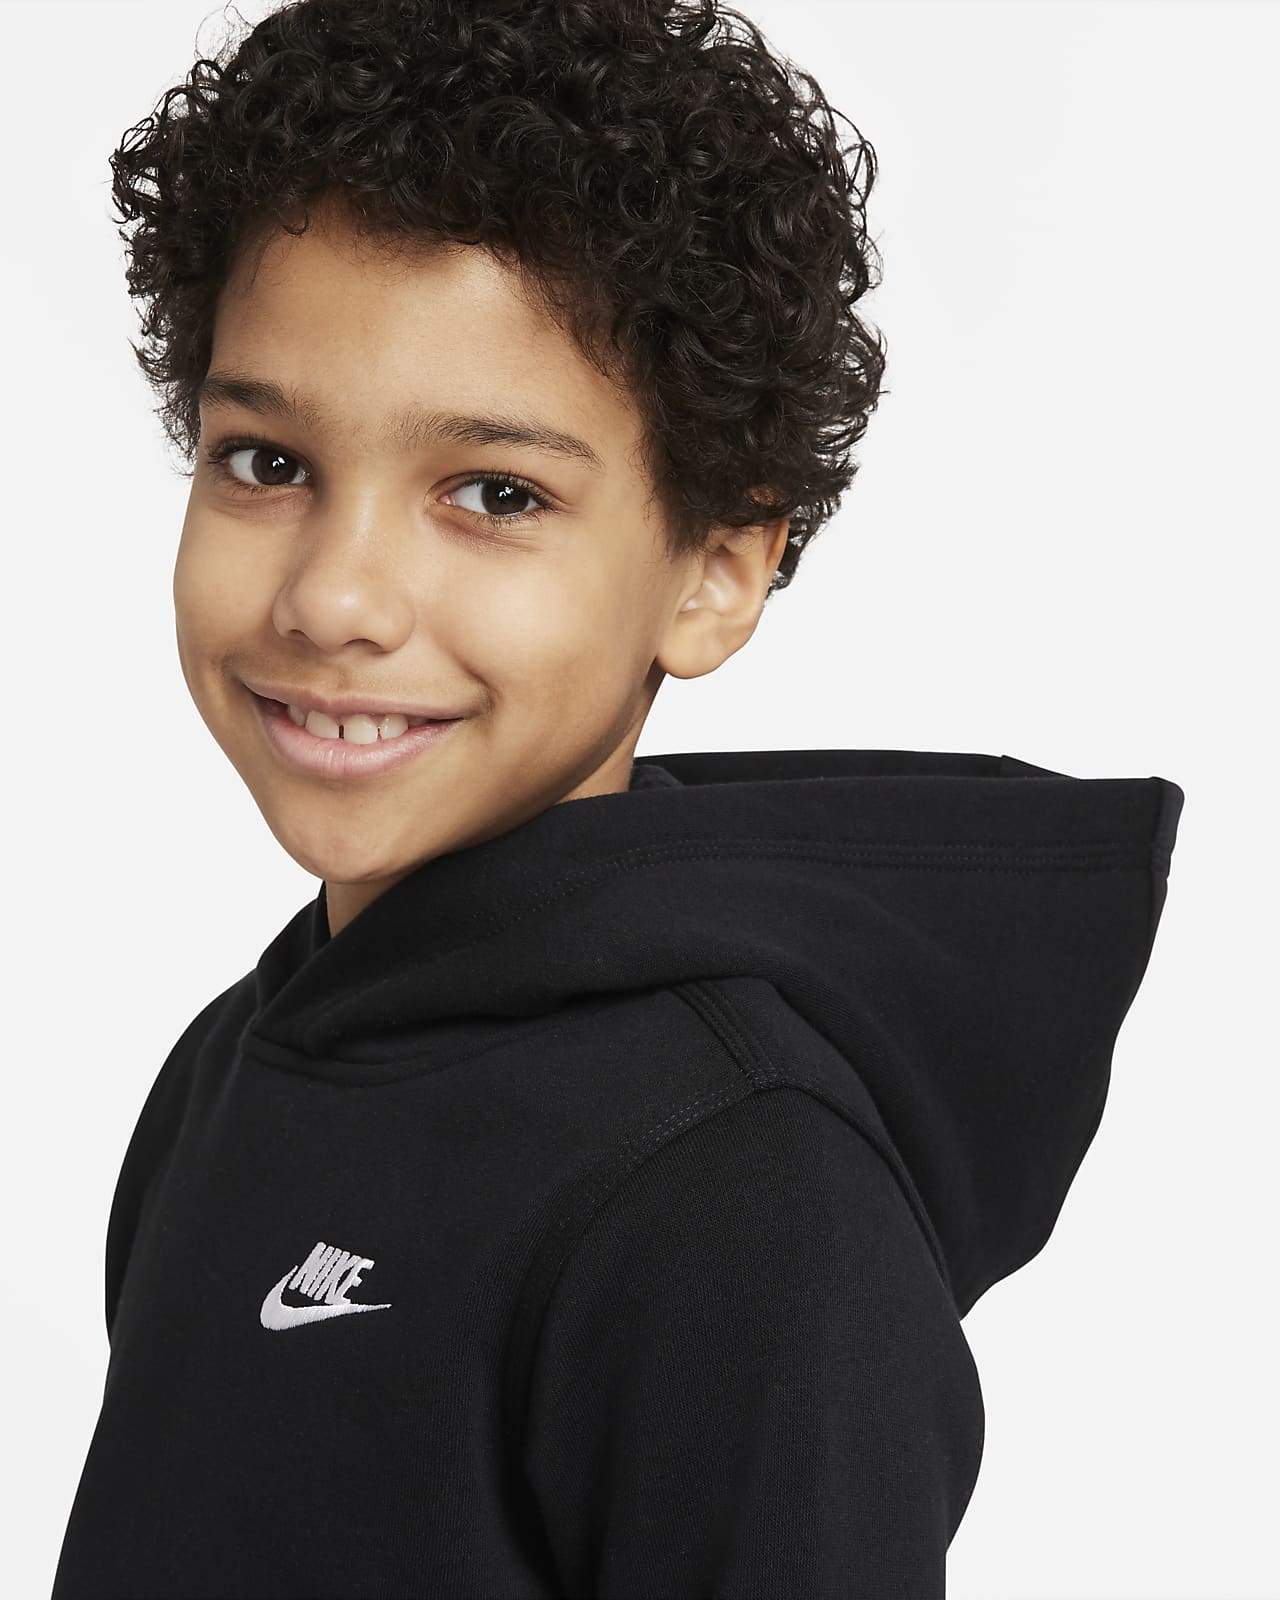 Nike Sportswear Club Big Kids' Pullover Hoodie. Nike.com